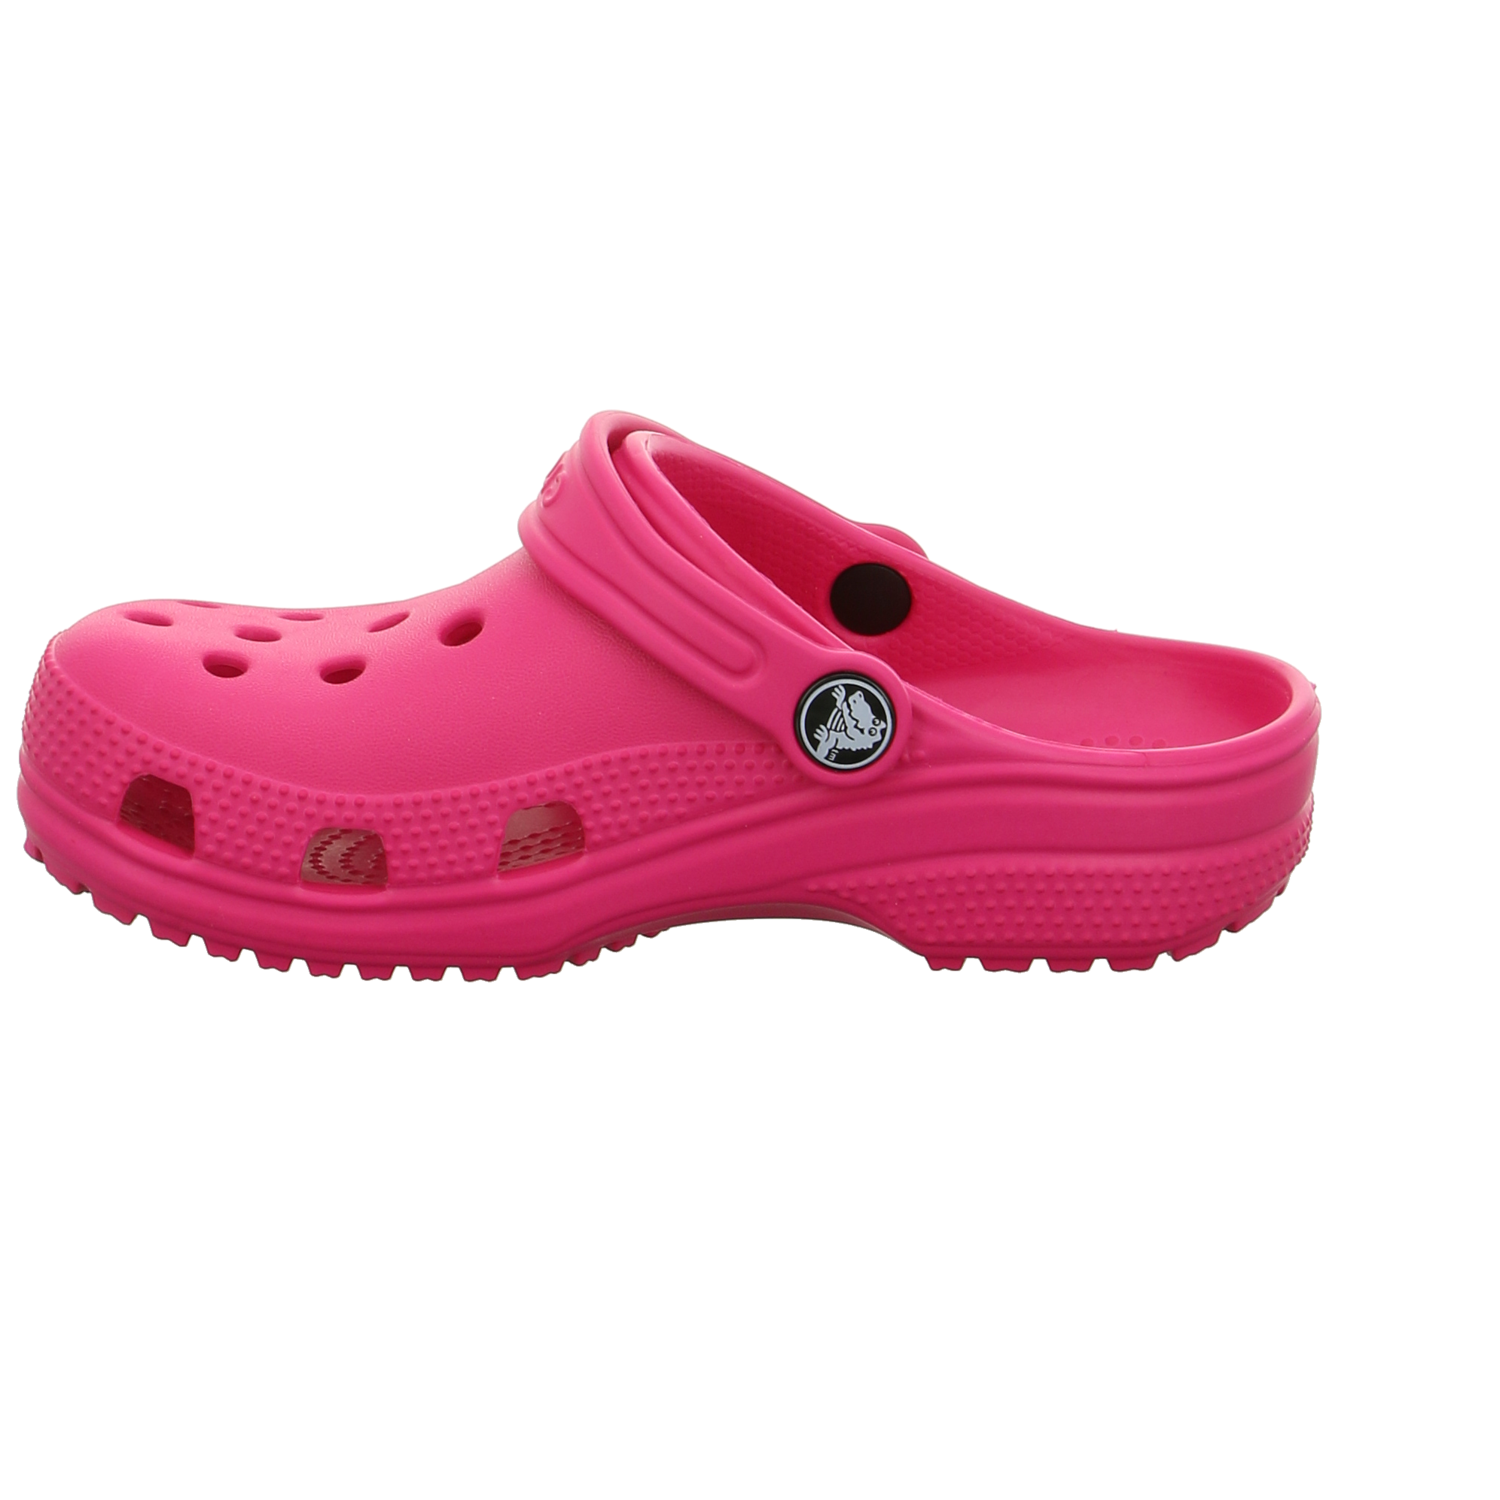 Crocs Kinder-Clogs pink / fuchsia